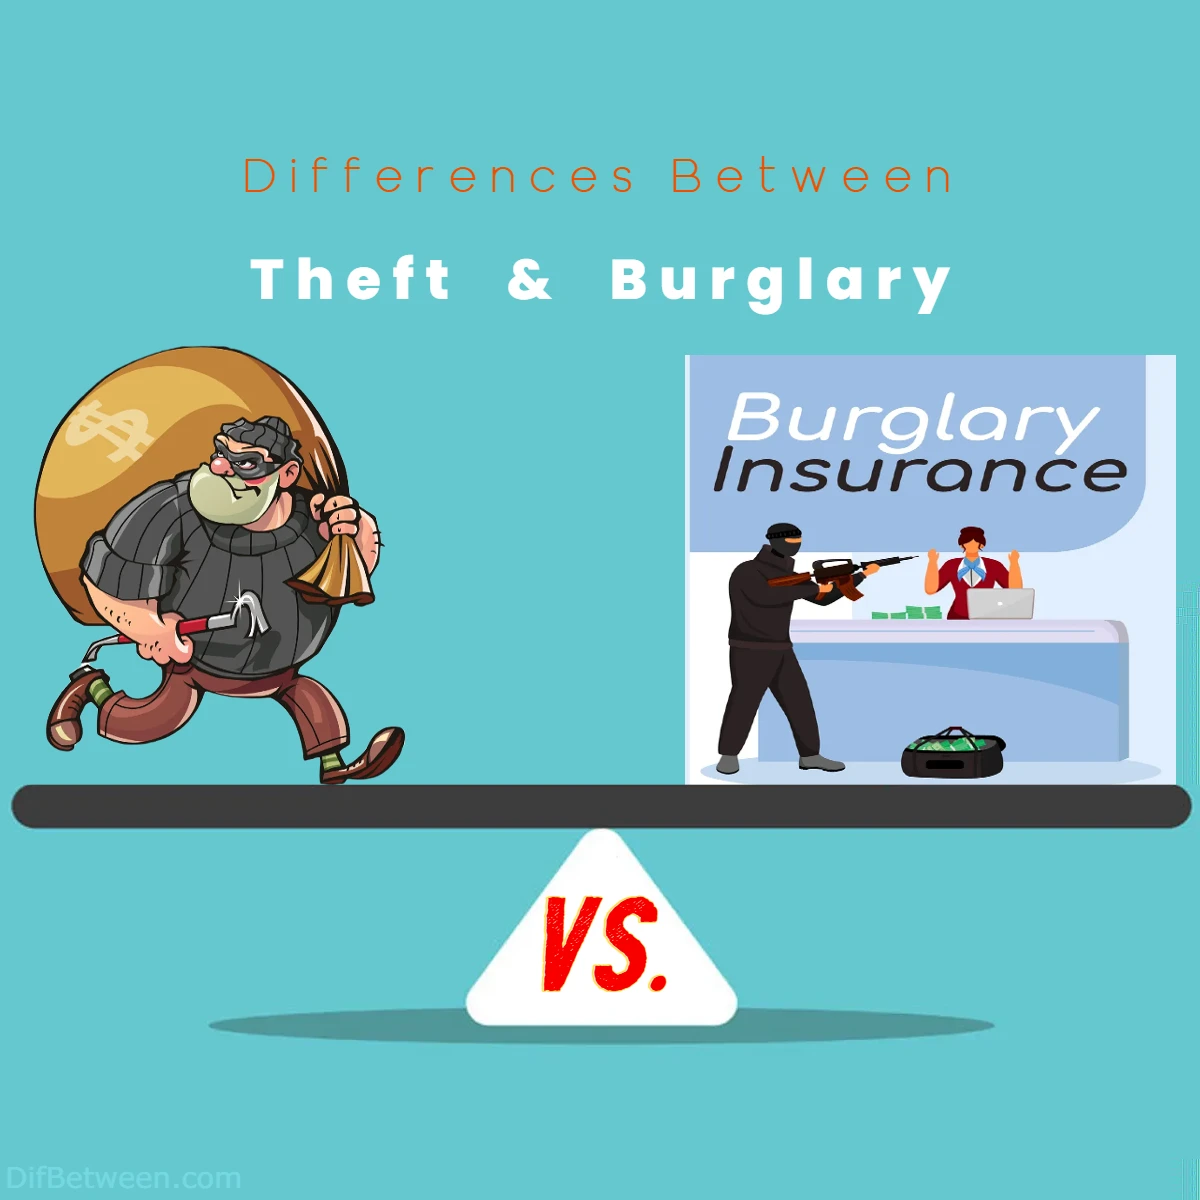 Differences Between Theft vs Burglary